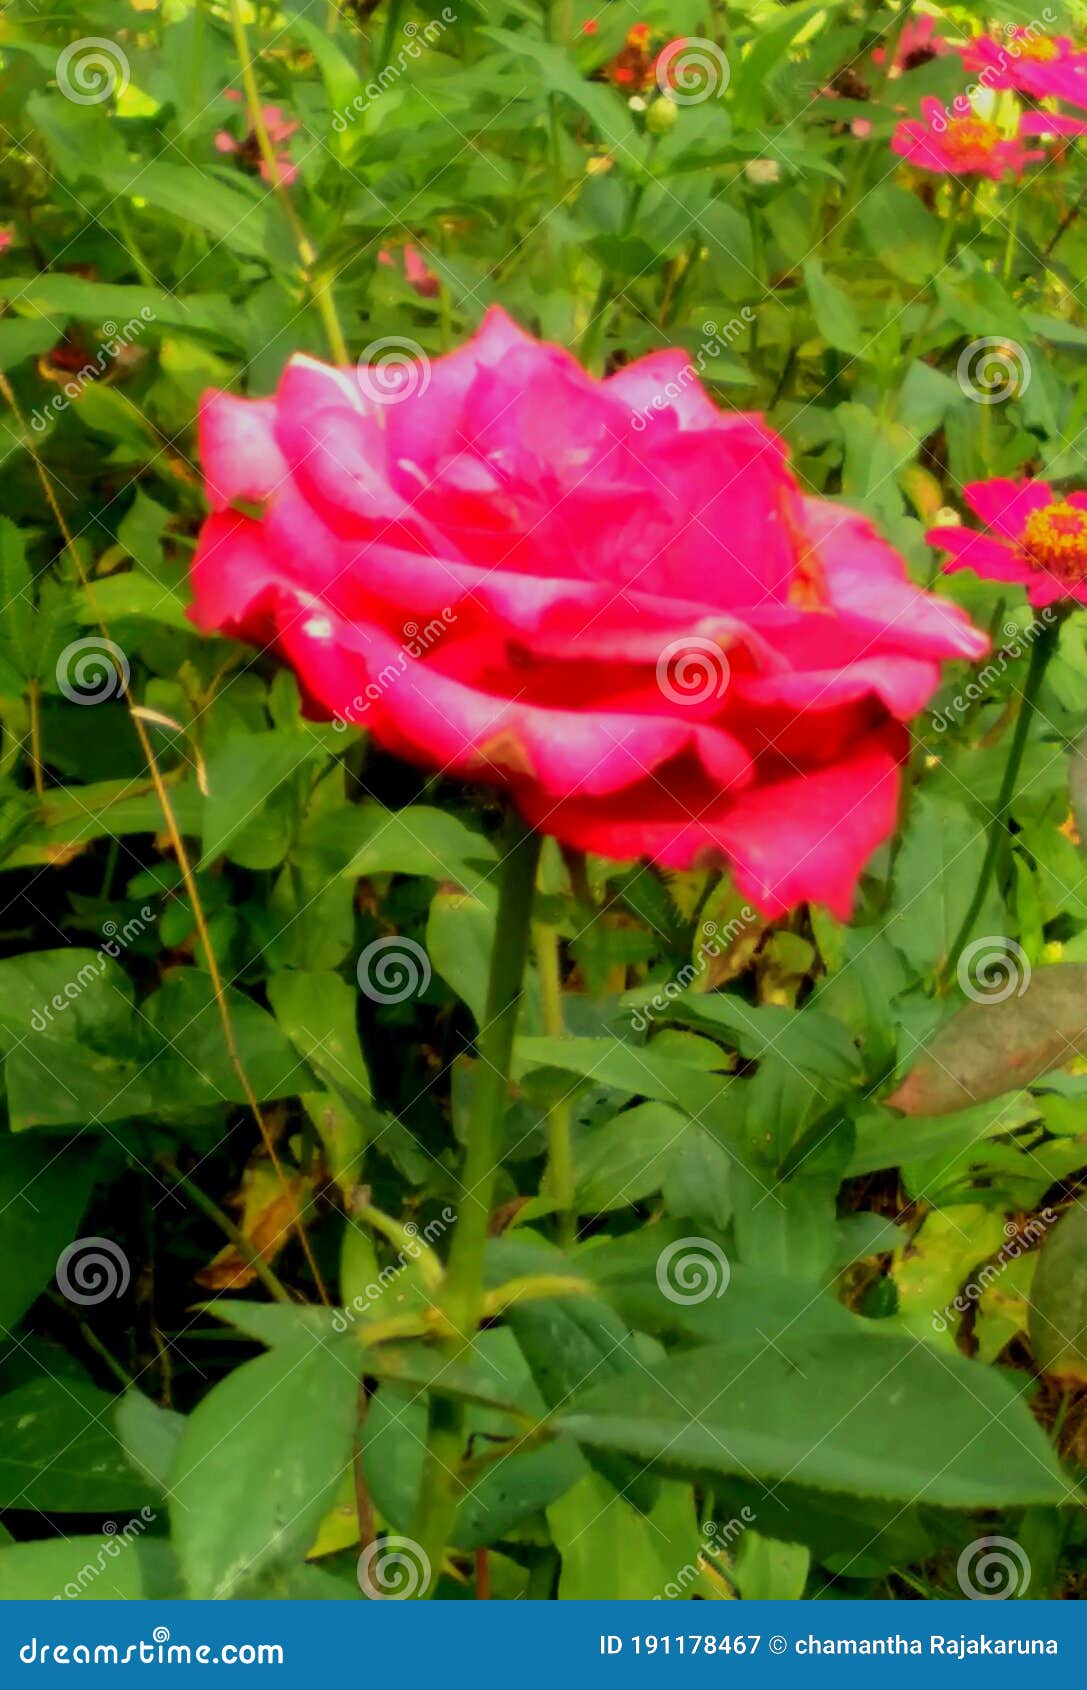 Focus Image of Red Rose Bud/Sri lanka/Photo/Nature Image/Picture 